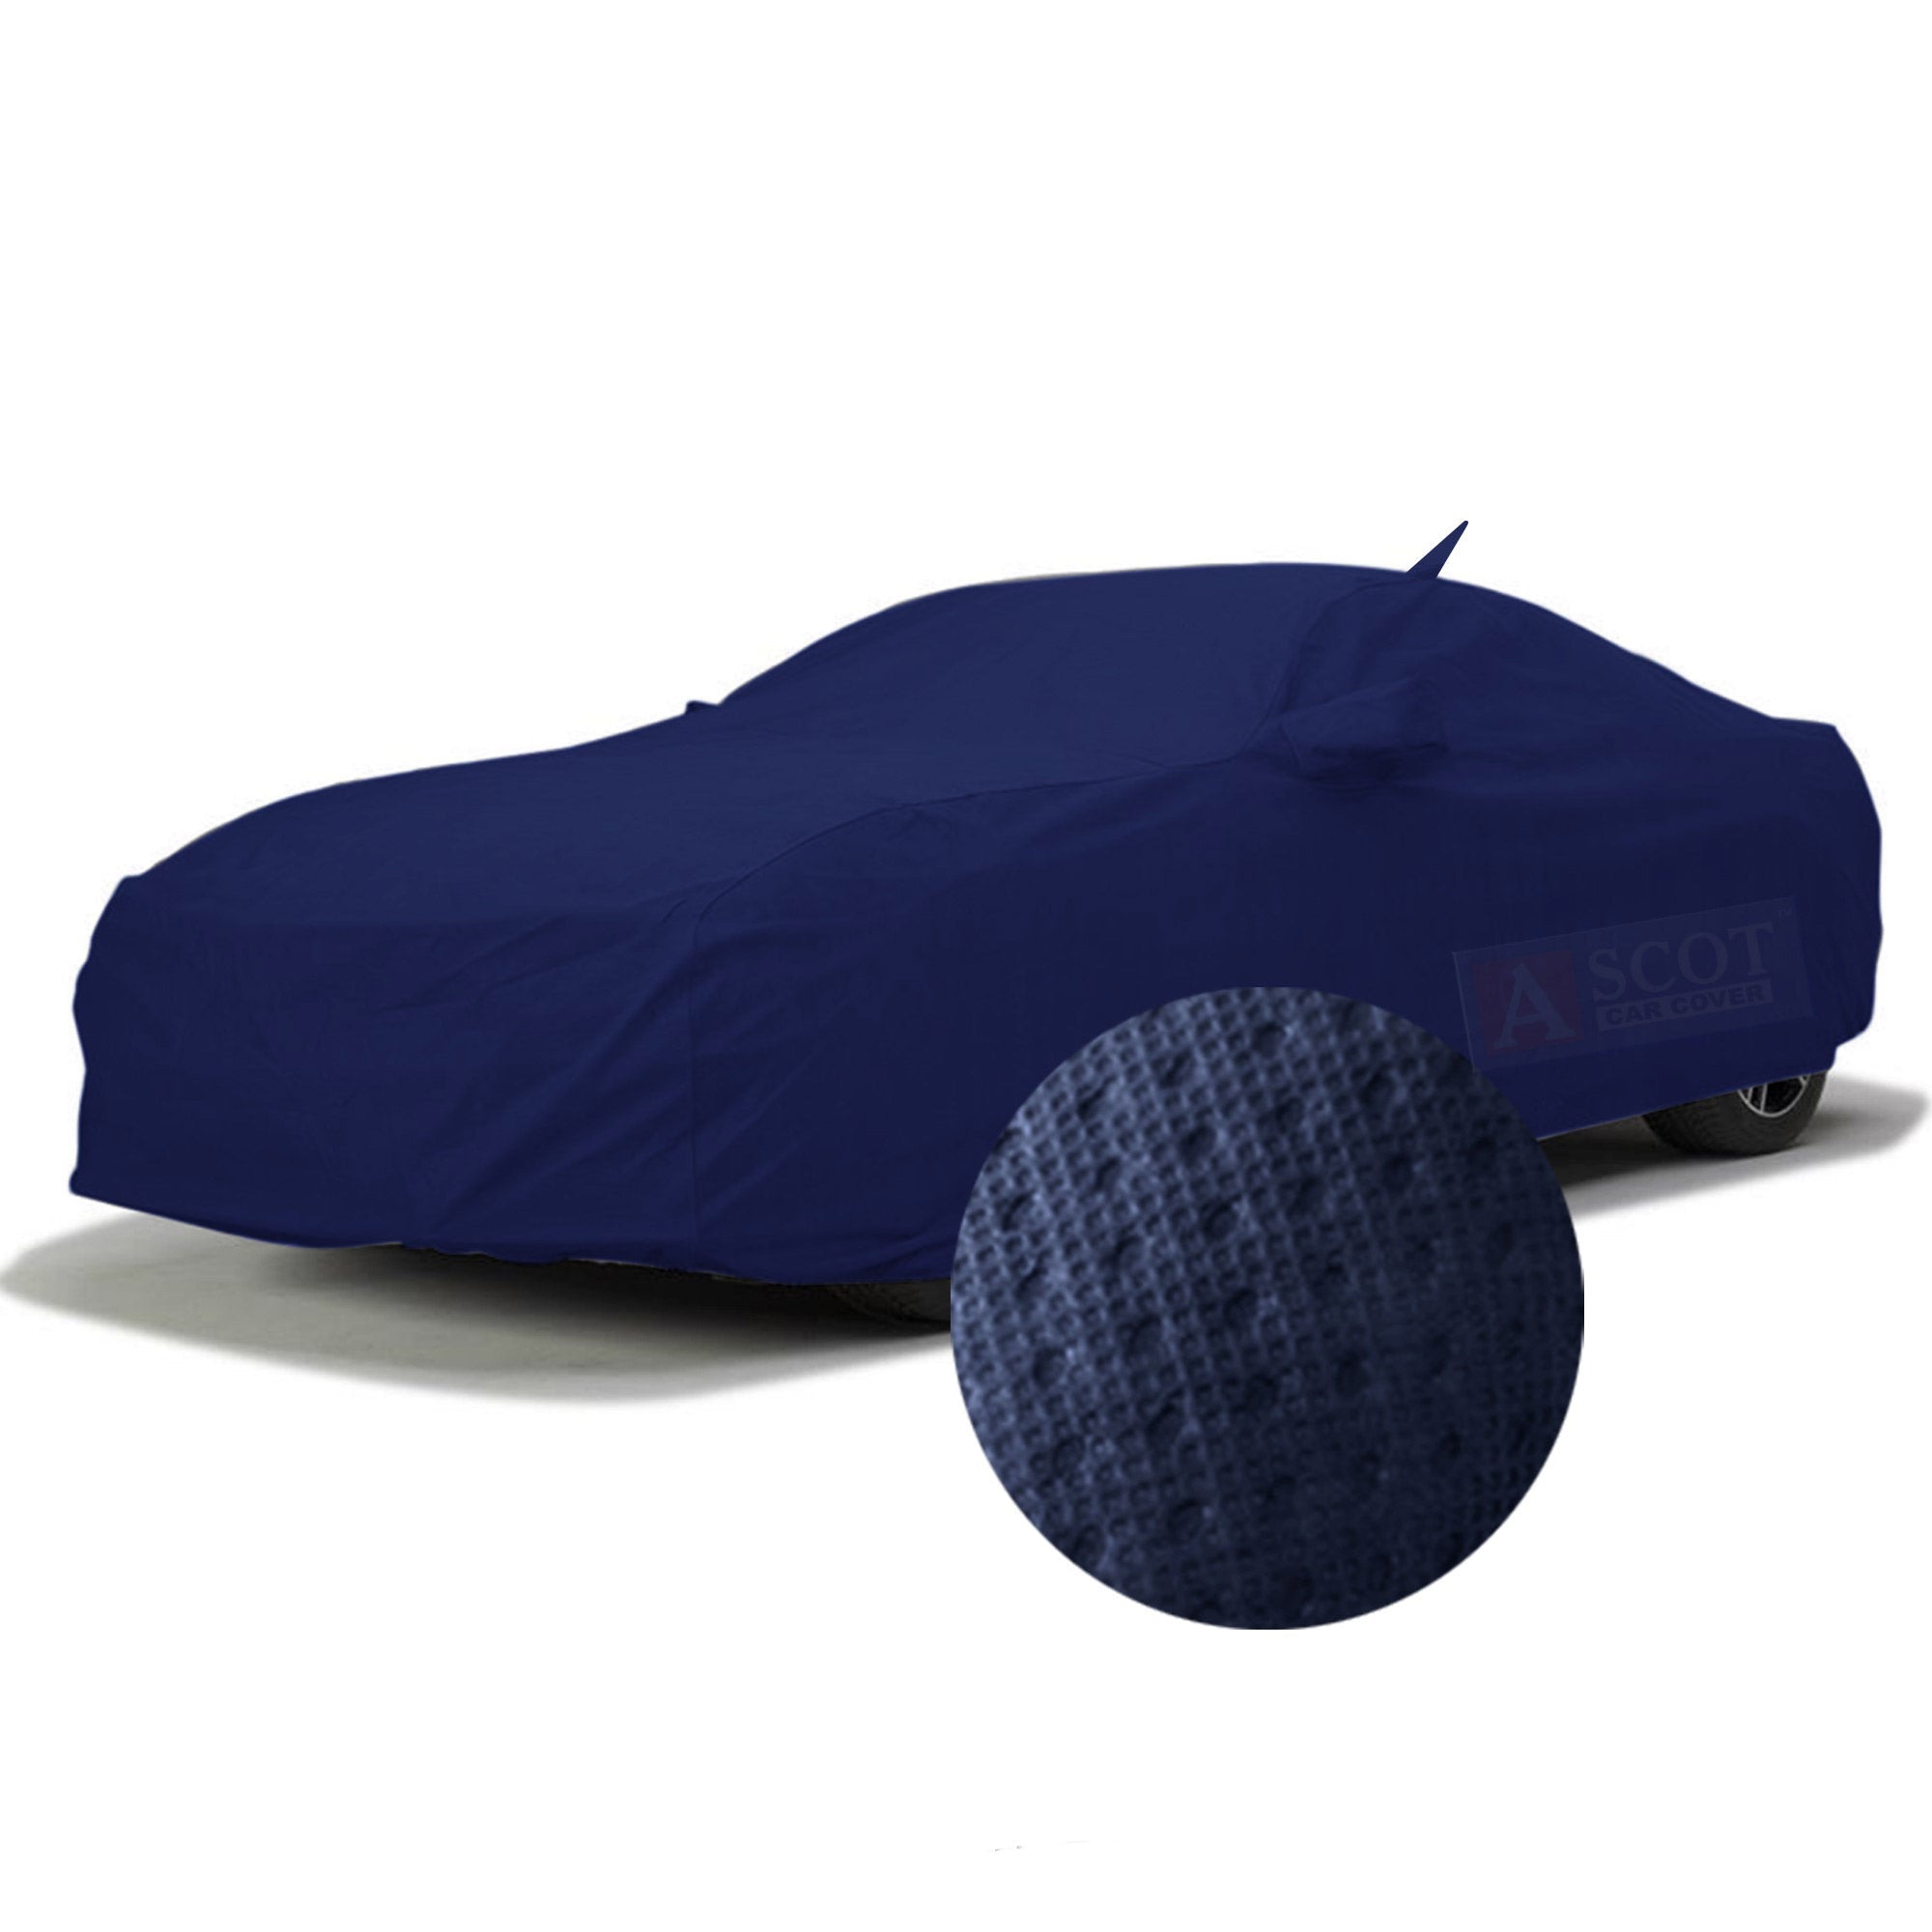 Ascot Skoda Rapid Car Cover Waterproof 2011-2024 Model with Mirror